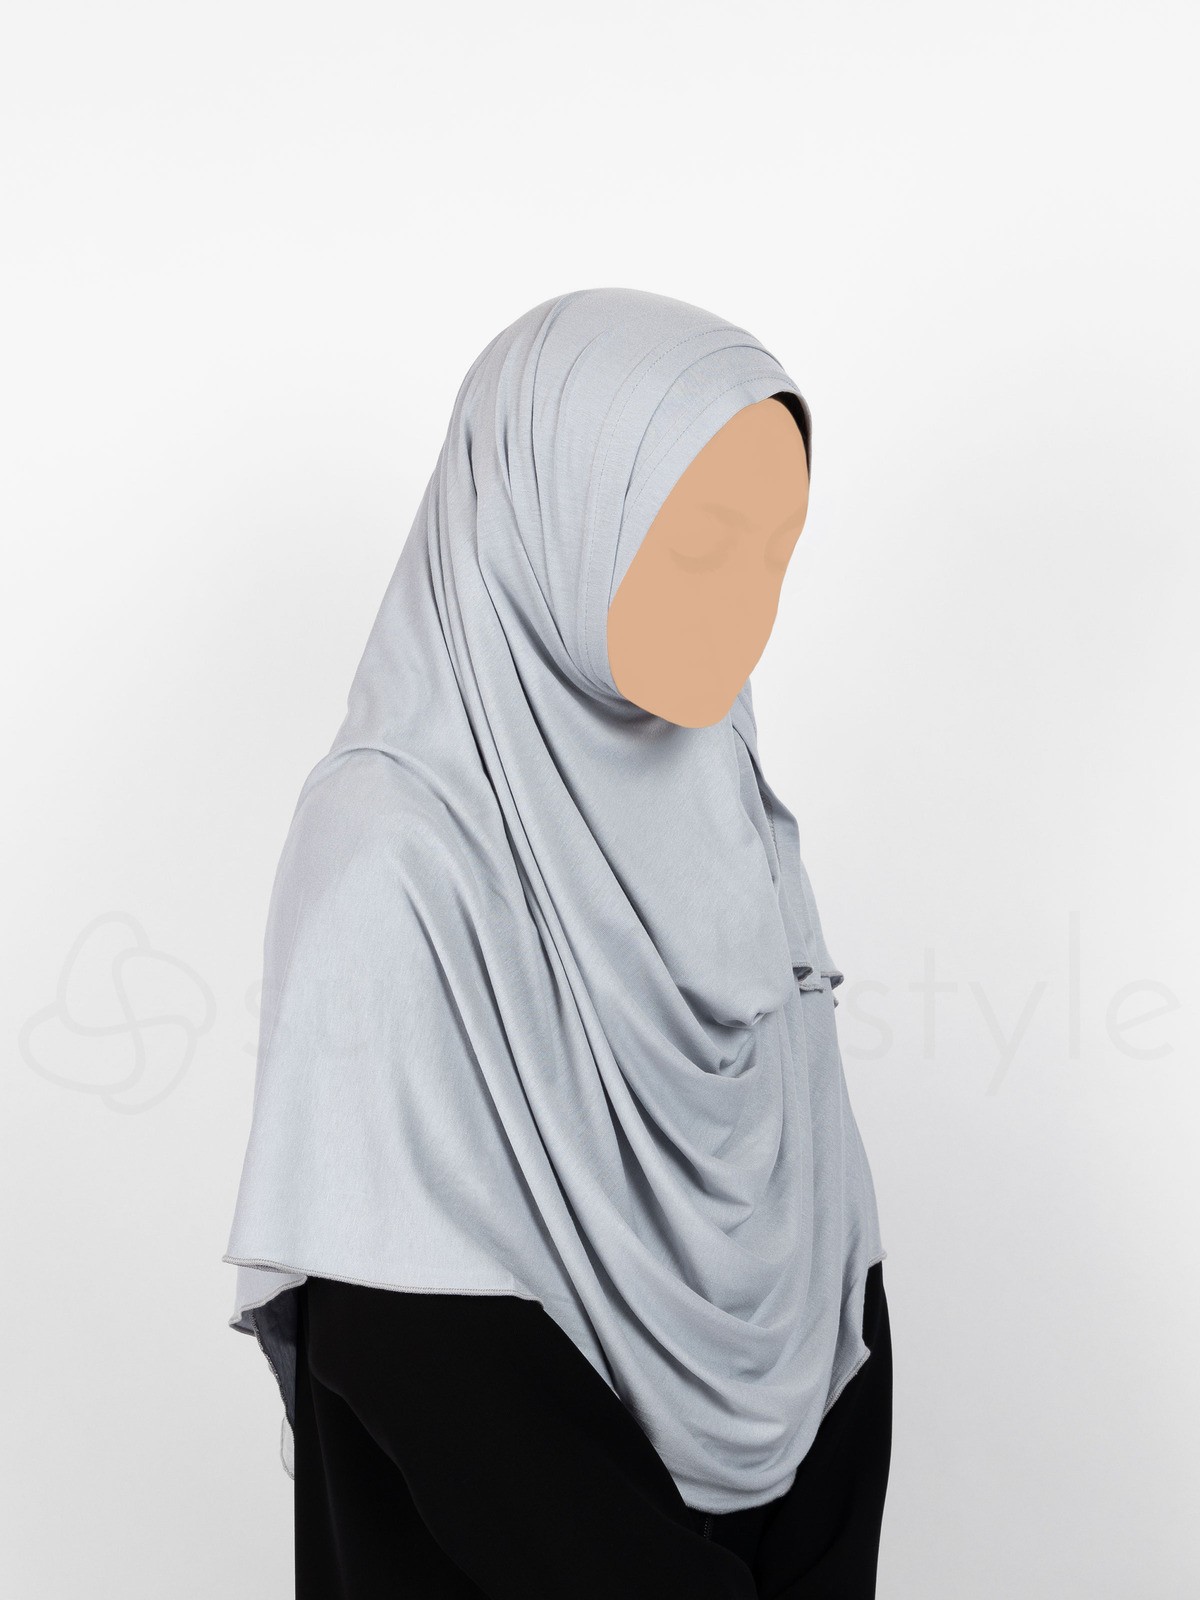 Sunnah Style - Girls Truss Hijab (Silver Grey)